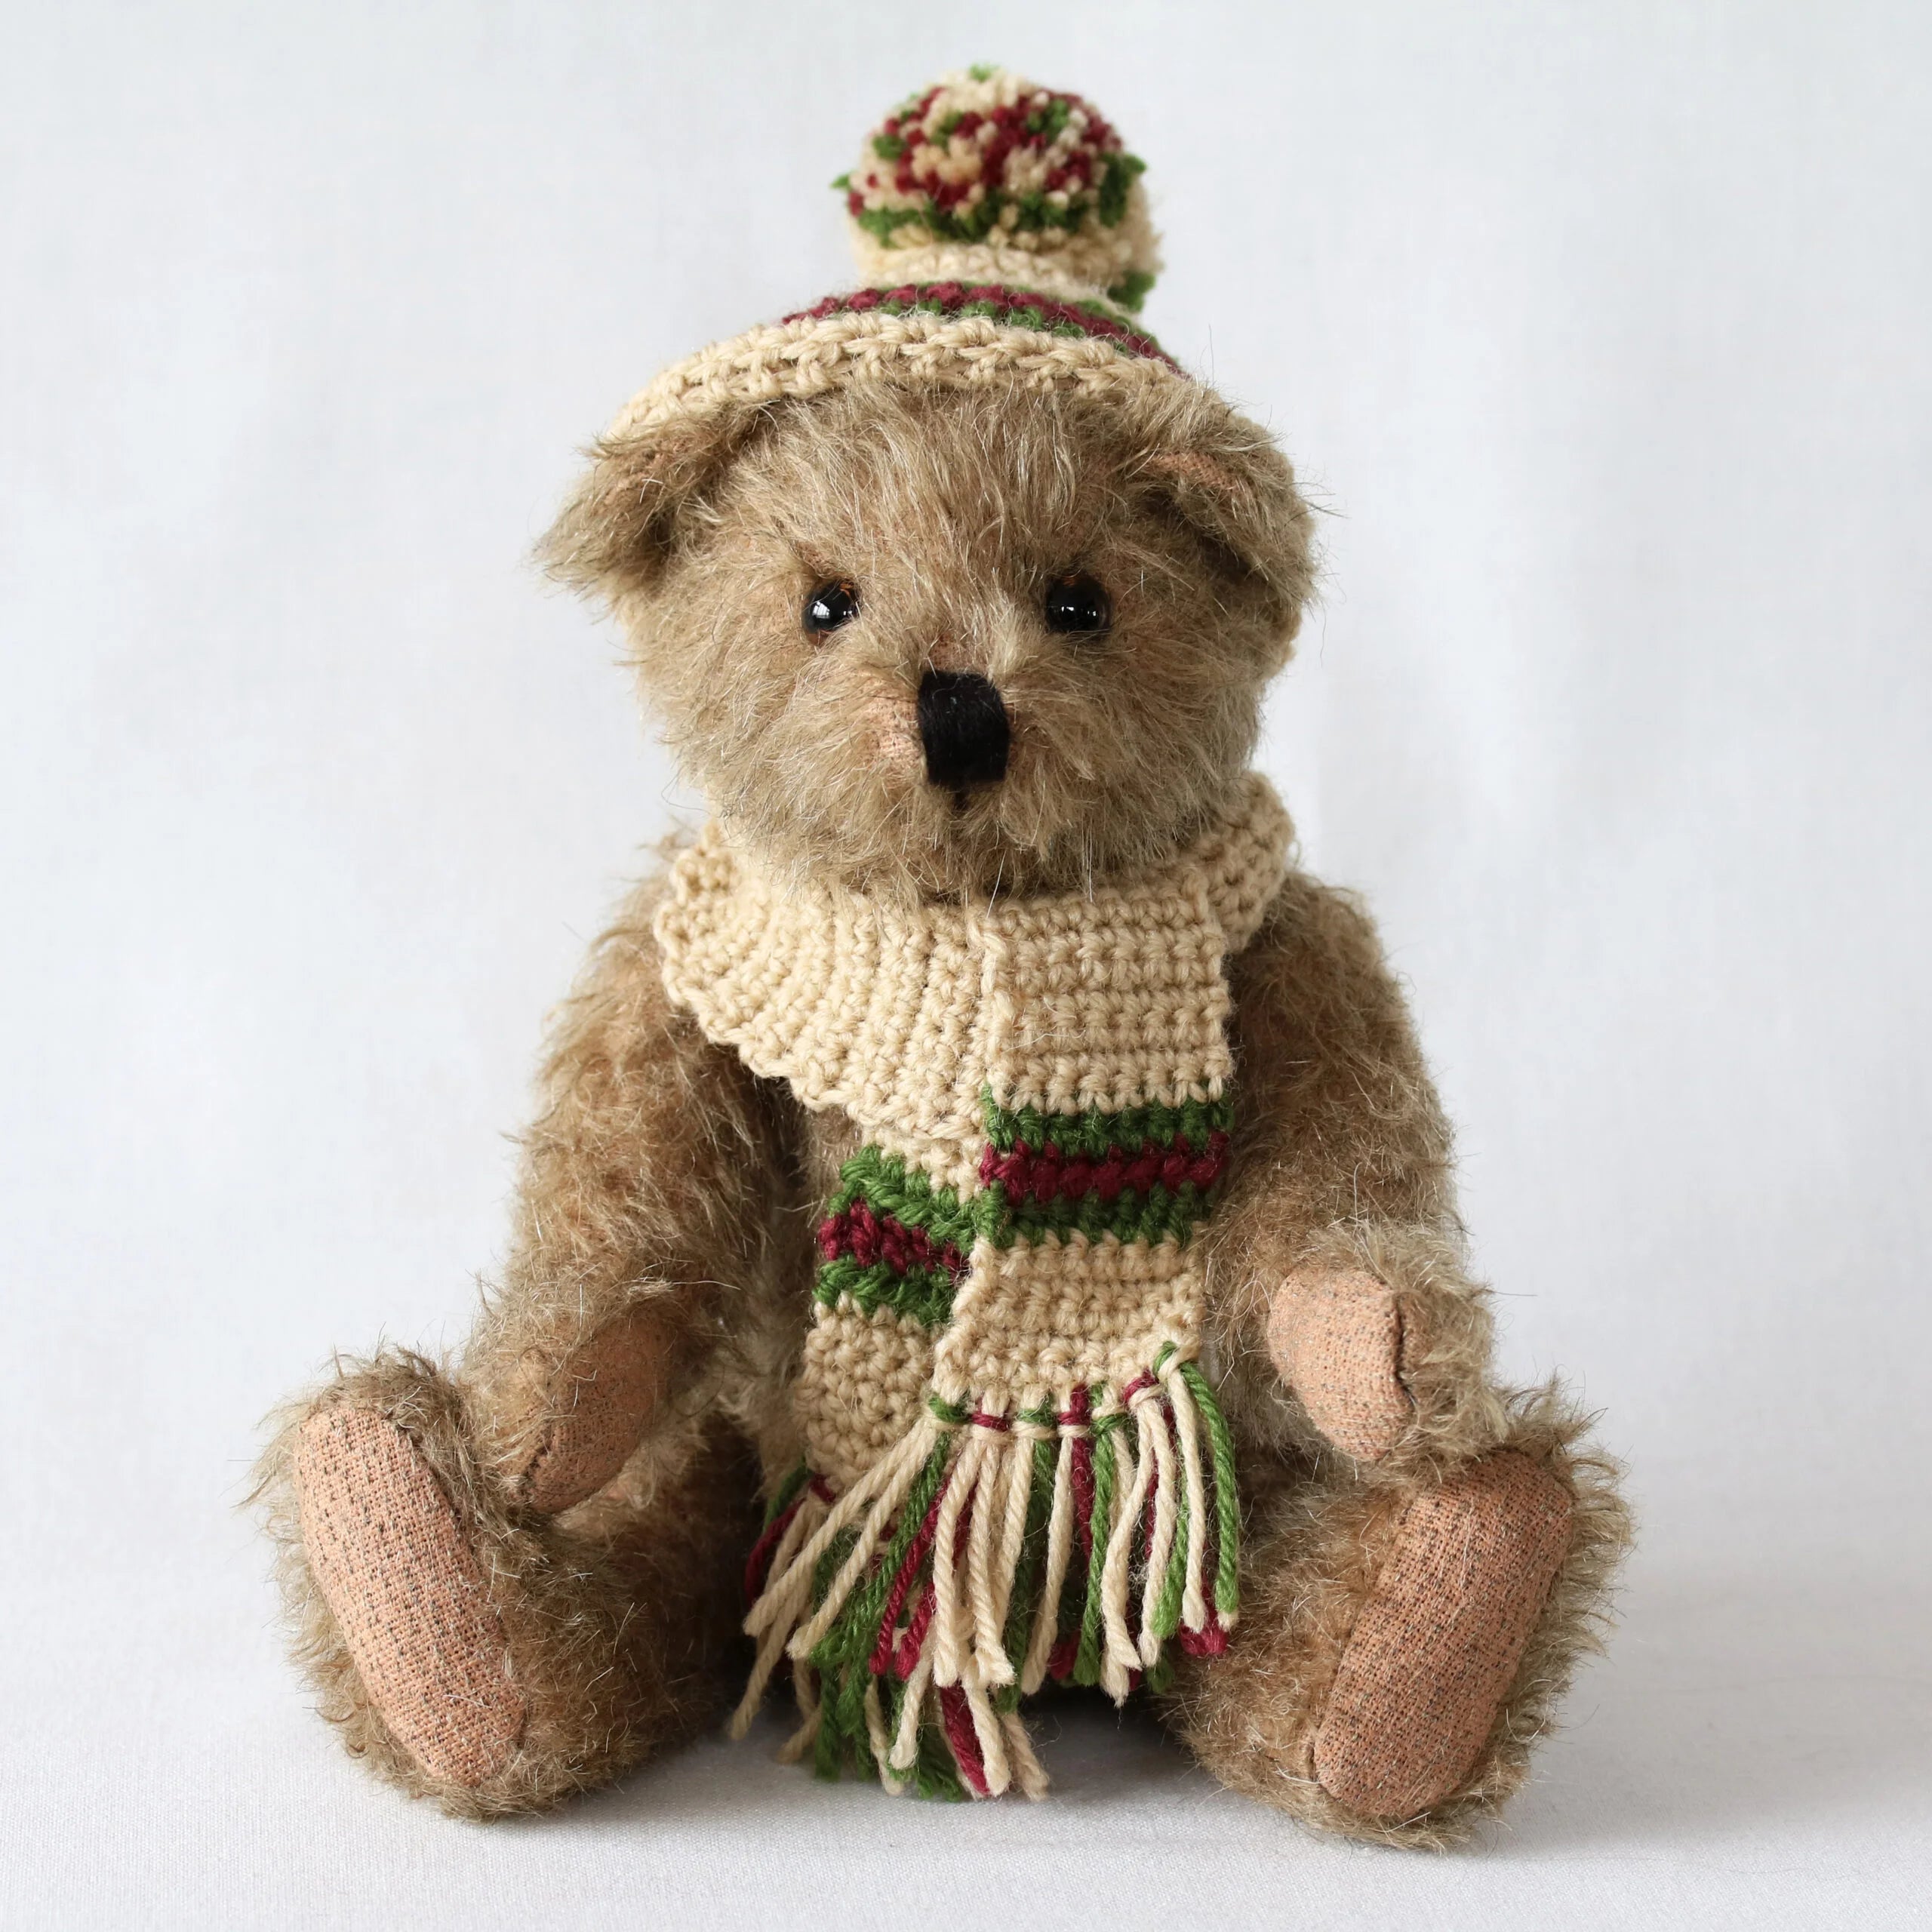 Gabriel The Handmade Bear from Canterbury Bears.